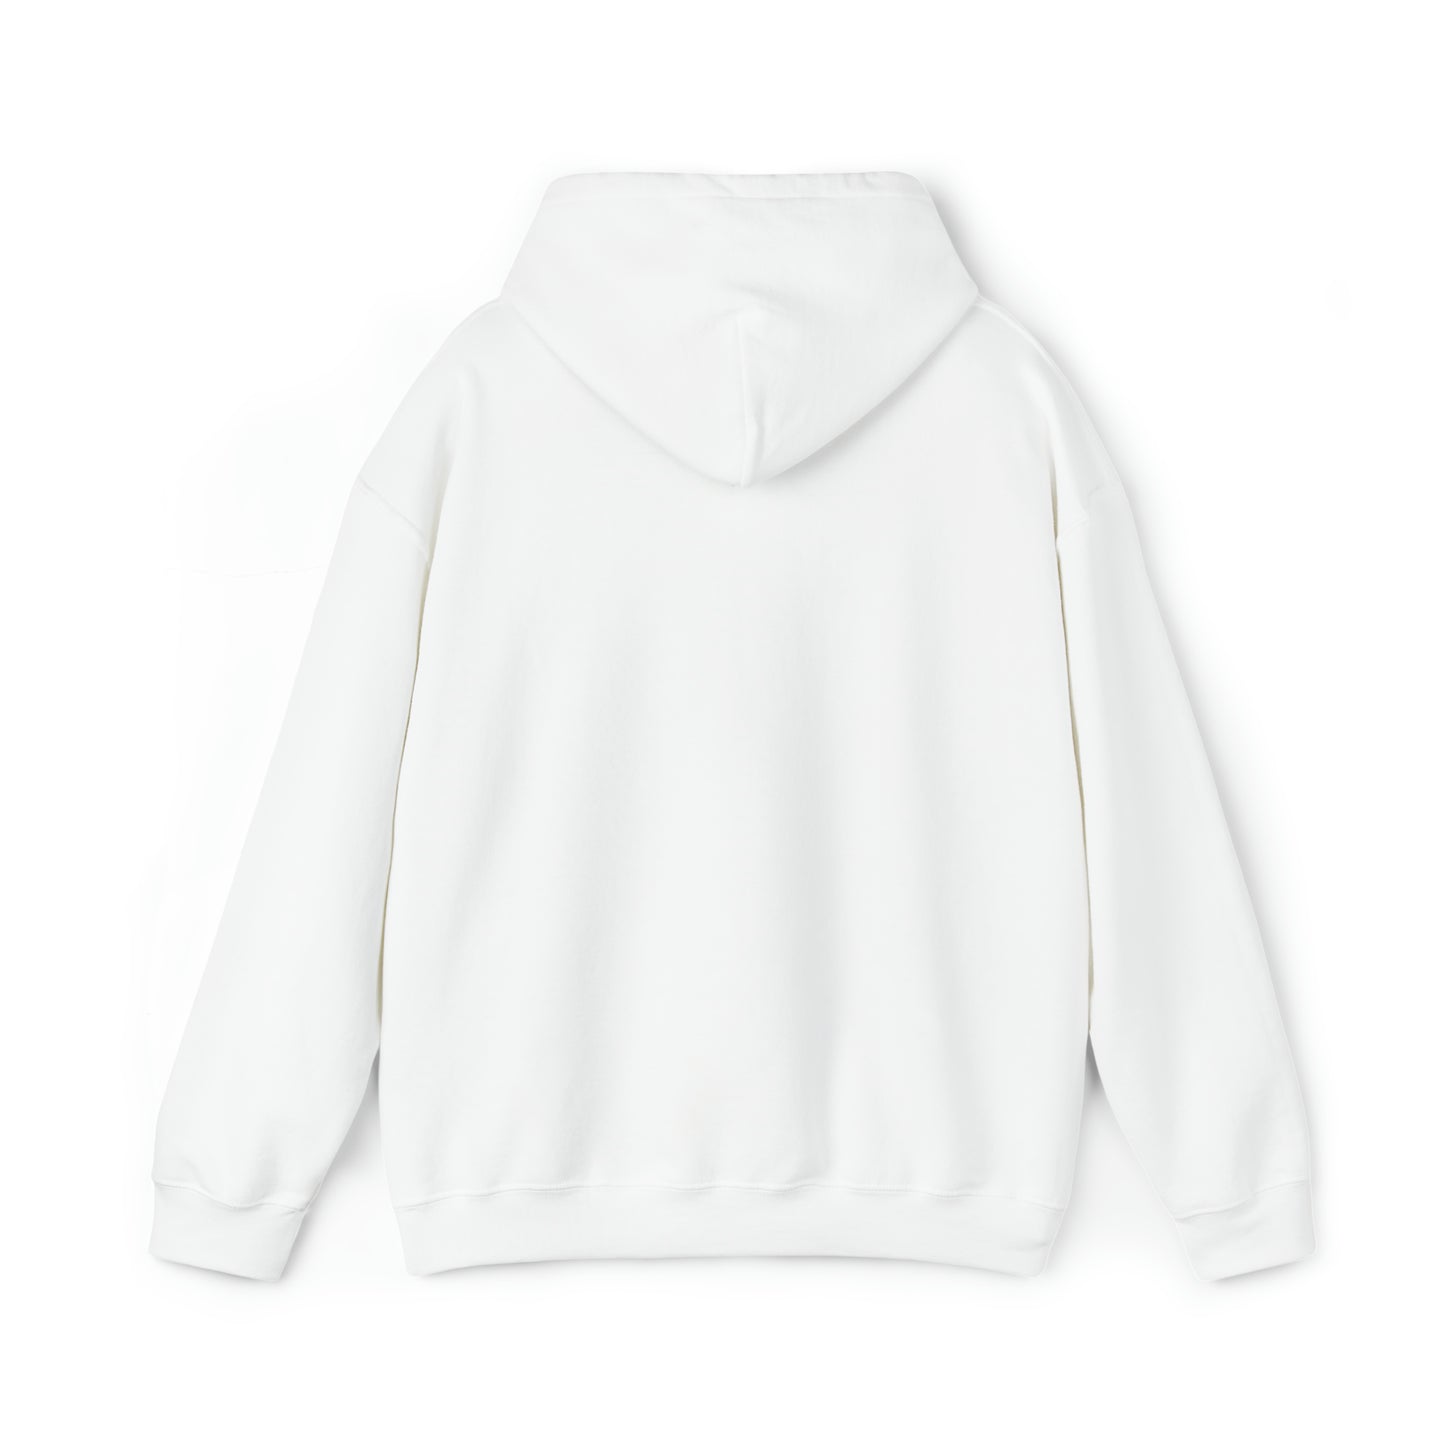 Luffy Unisex Hooded Sweatshirt